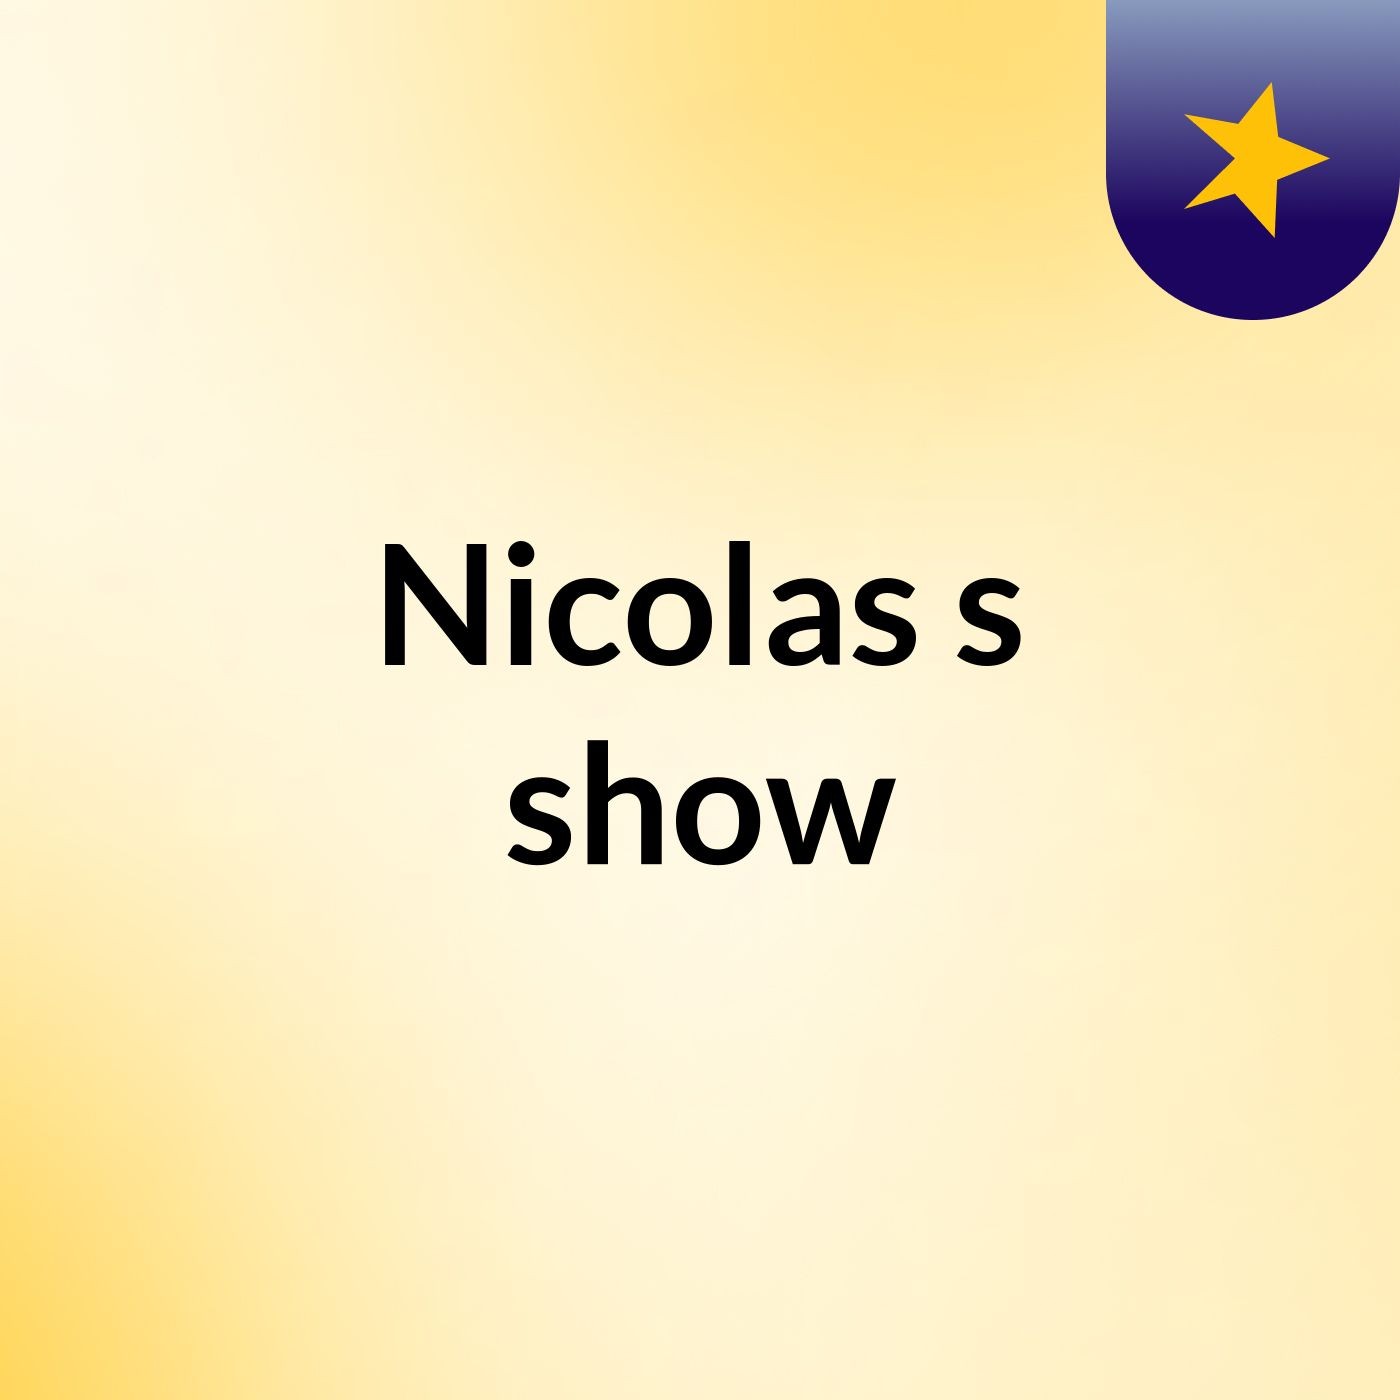 Nicolas's show